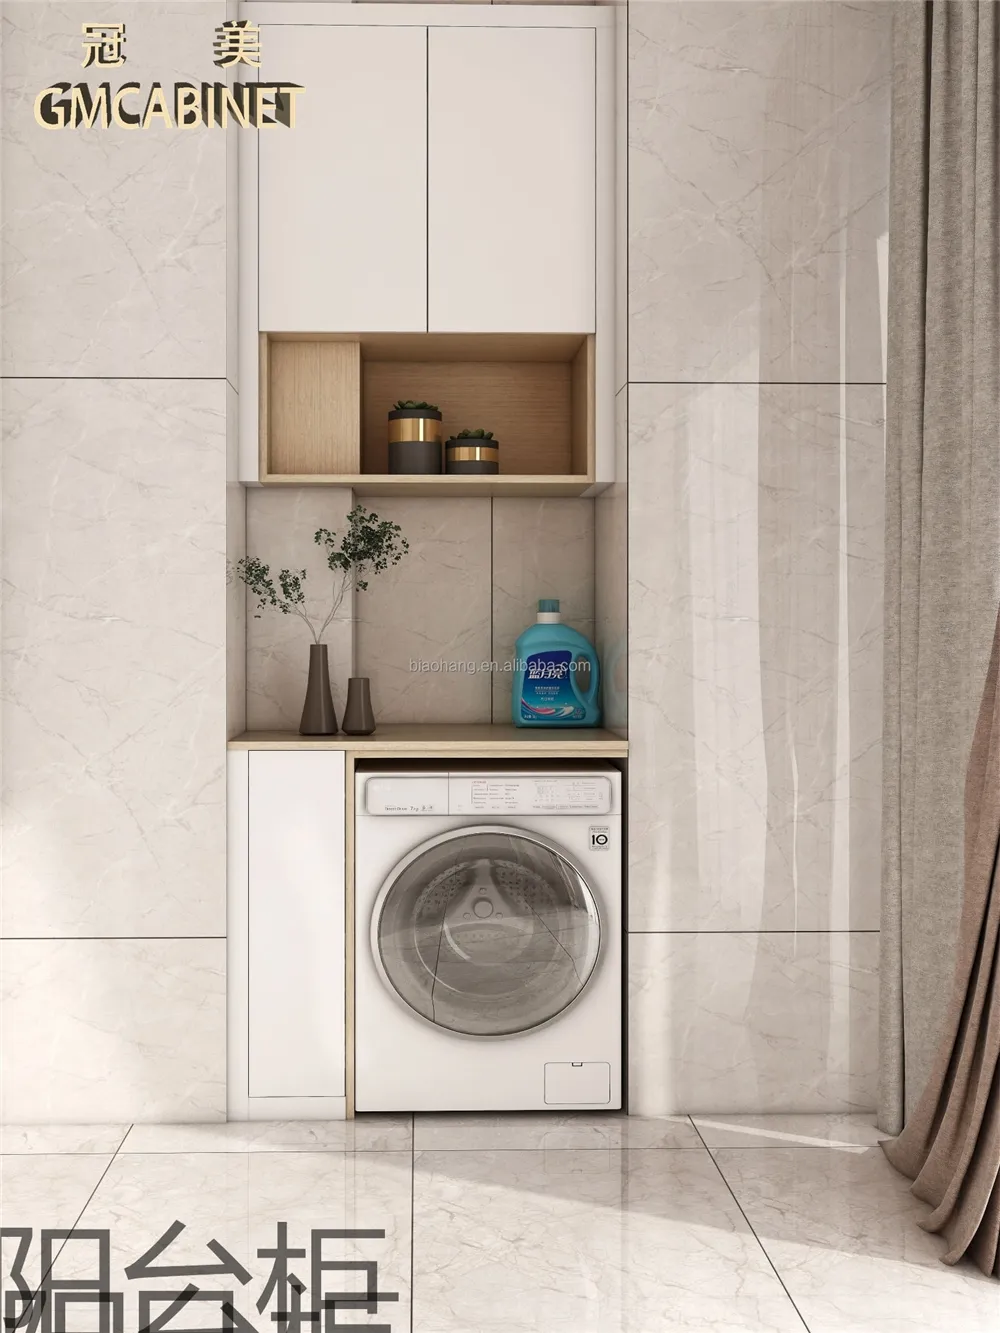 GM home modern design high gloss white rta kitchen cabinets